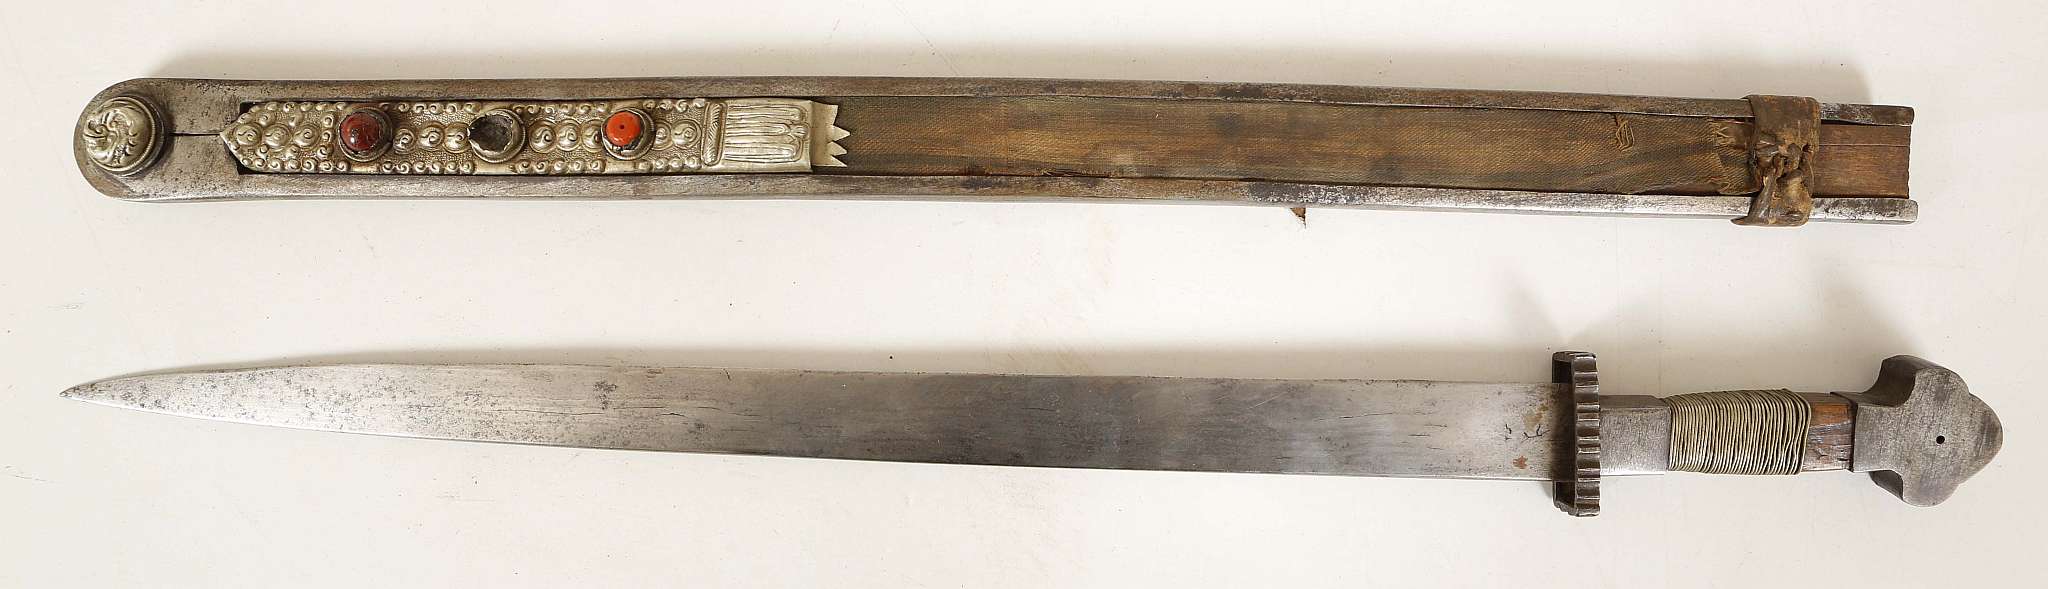 Late 18th / early 19th Century Tibetan sword, gun metal pommel, wire bound grip, gun metal collet,